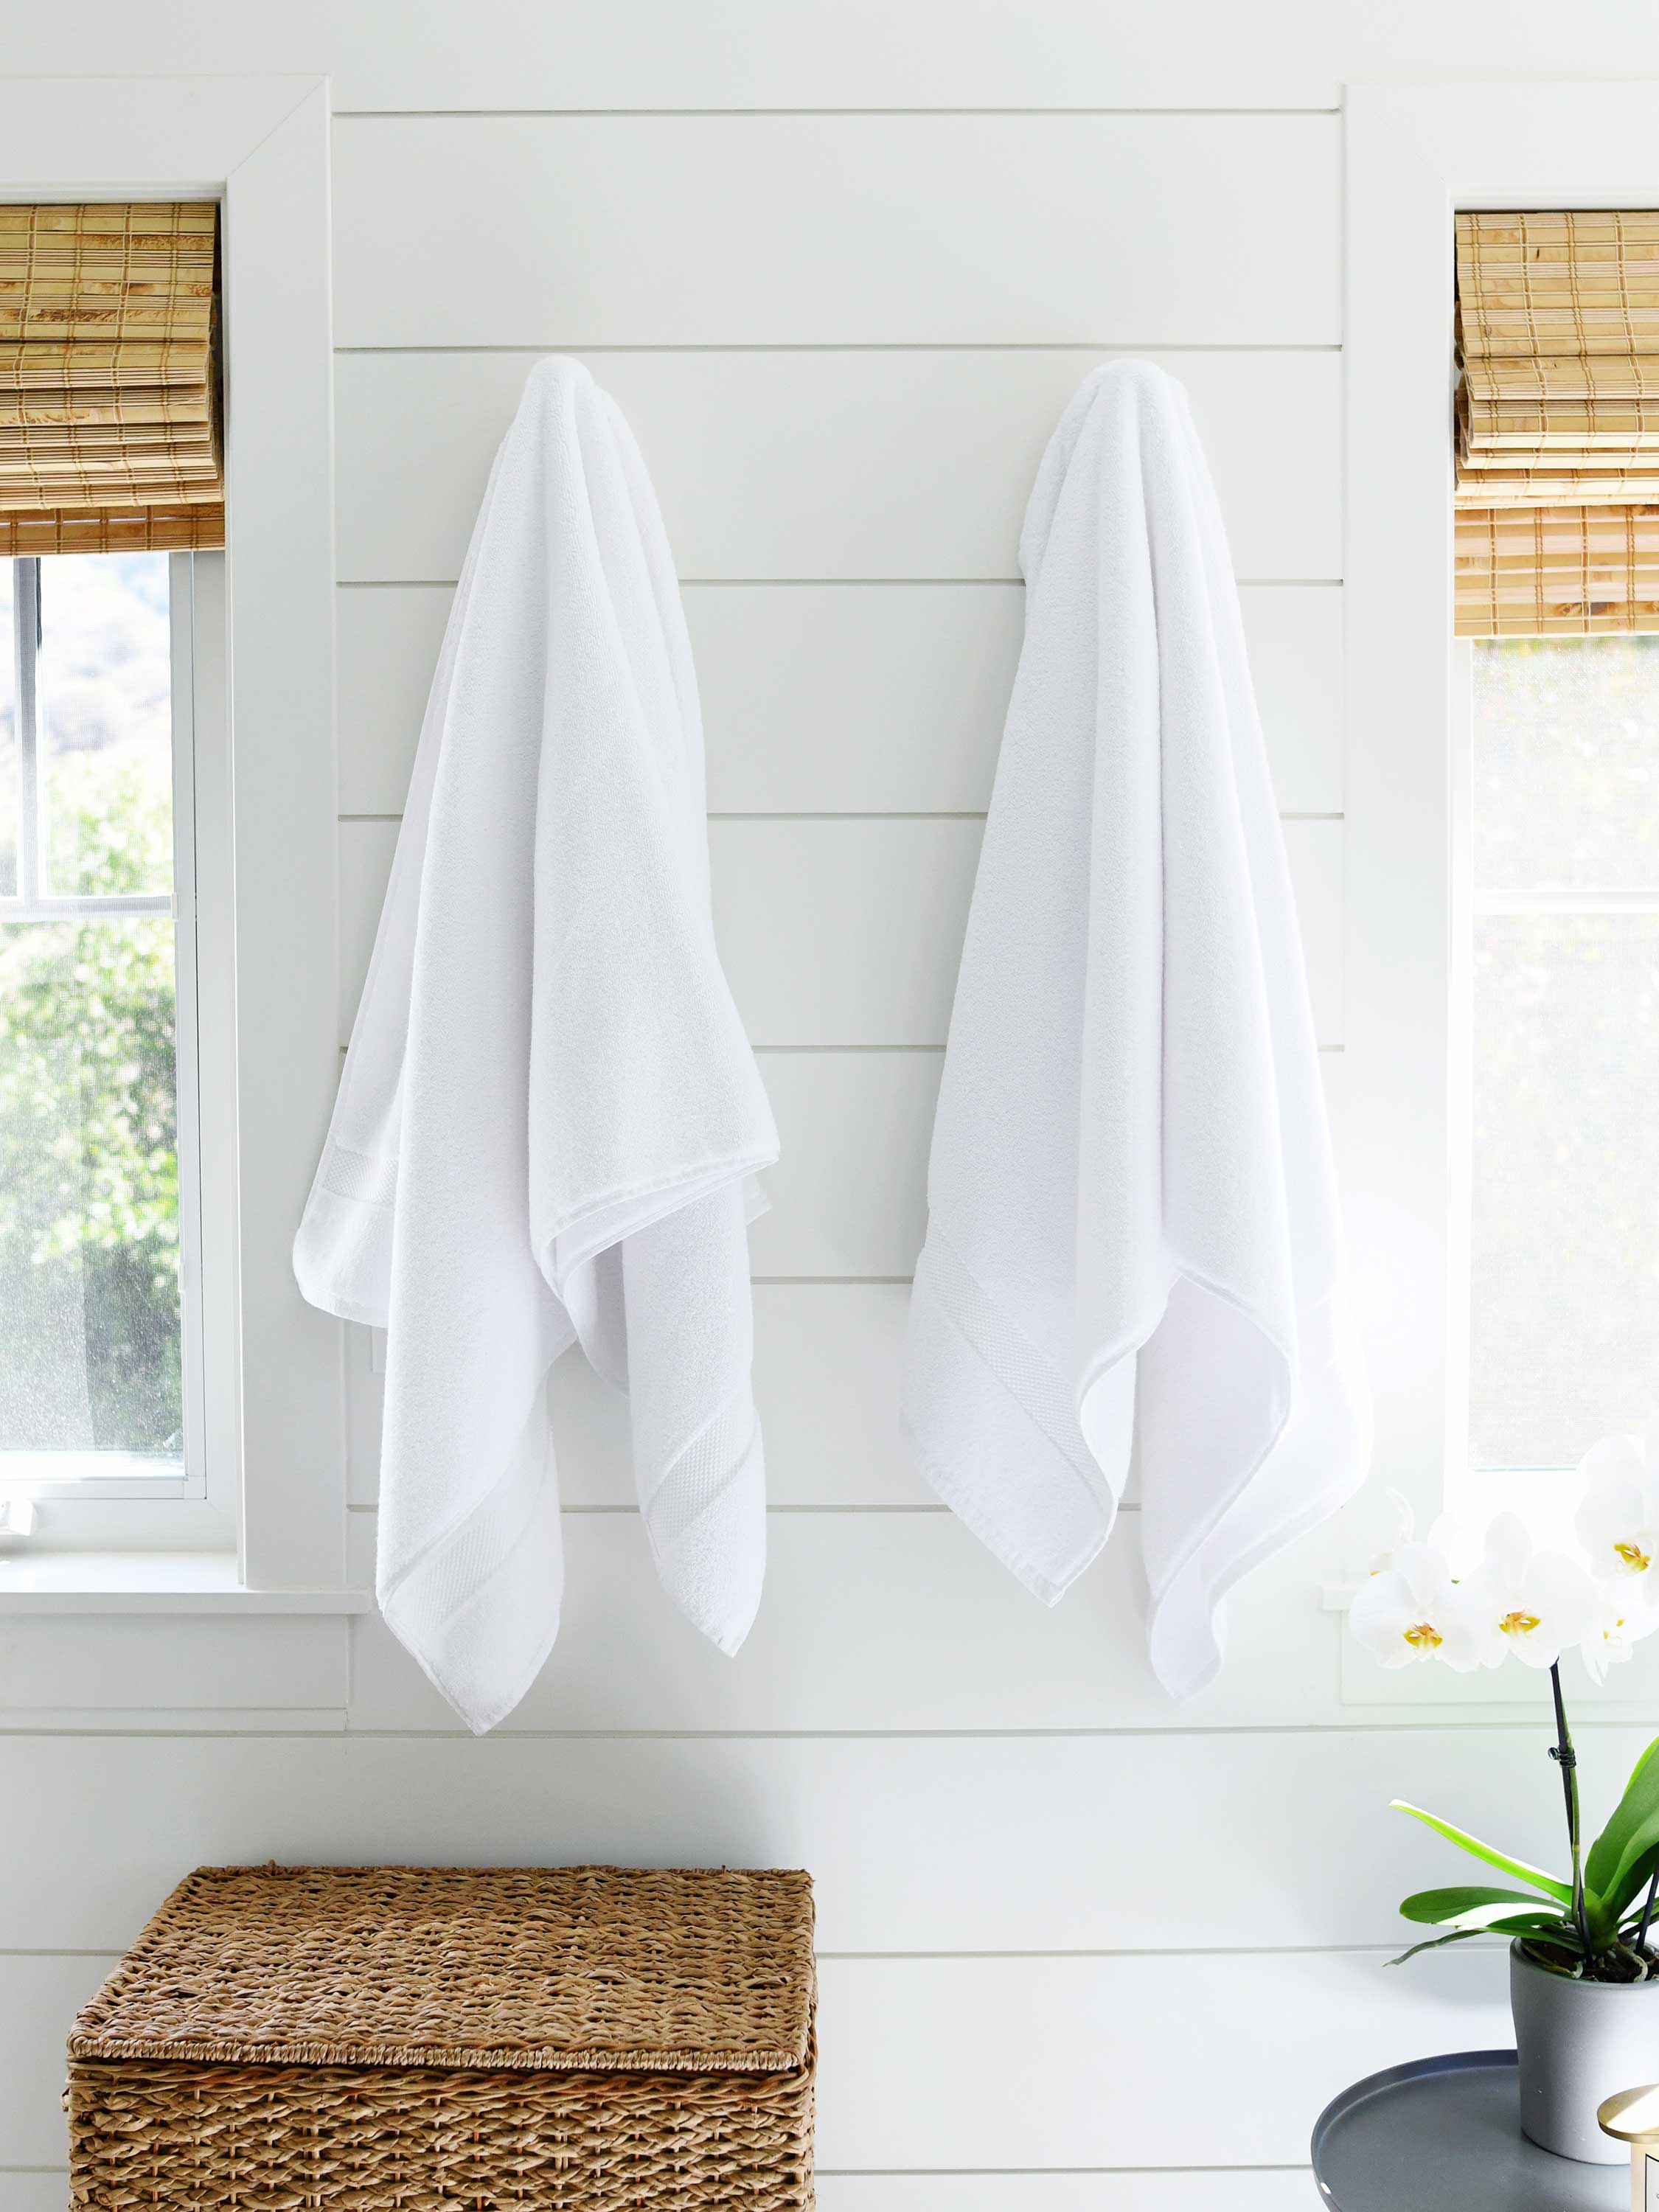 White Towels in Bath Towels 